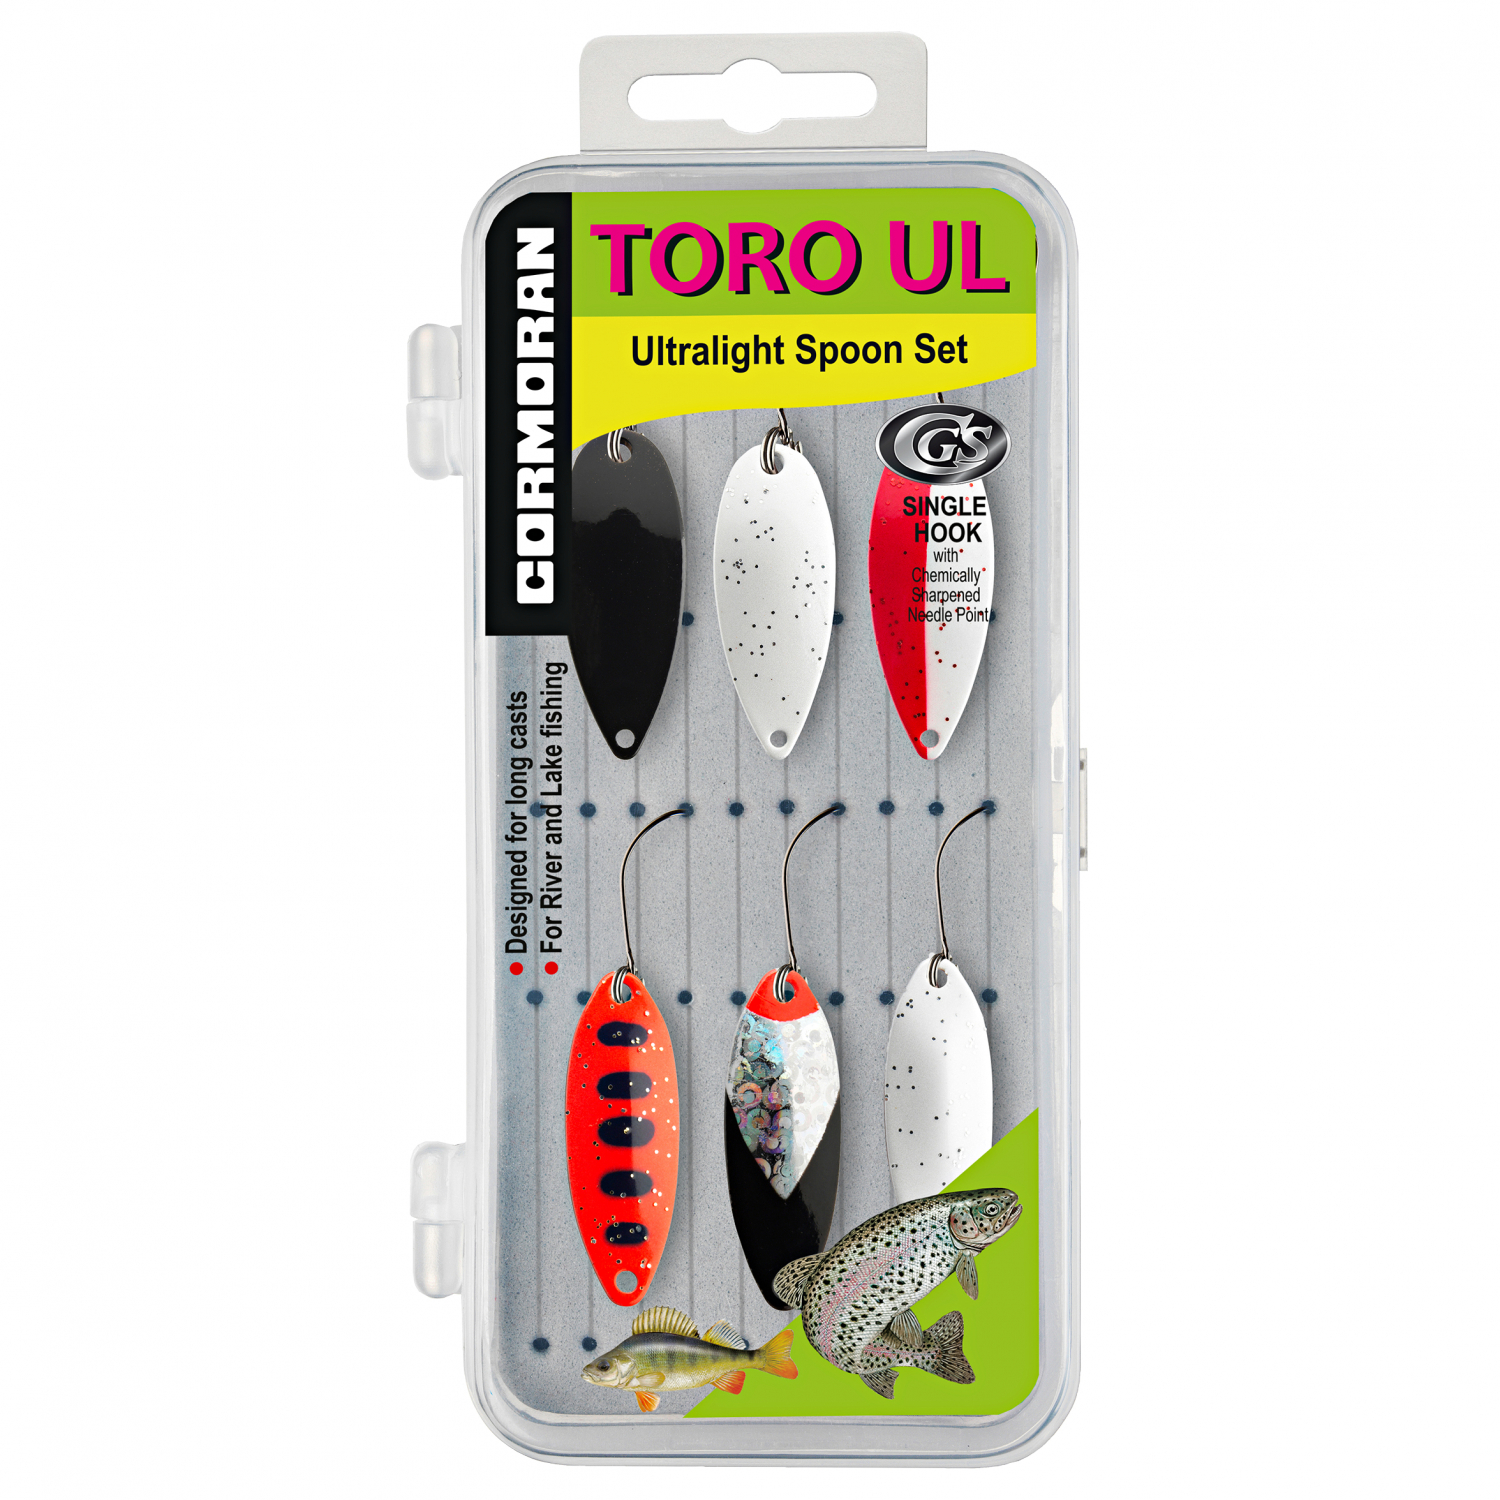 https://images.askari-sport.com/en/product/1/large/cormoran-trout-spoon-set-toro-ul-3.jpg